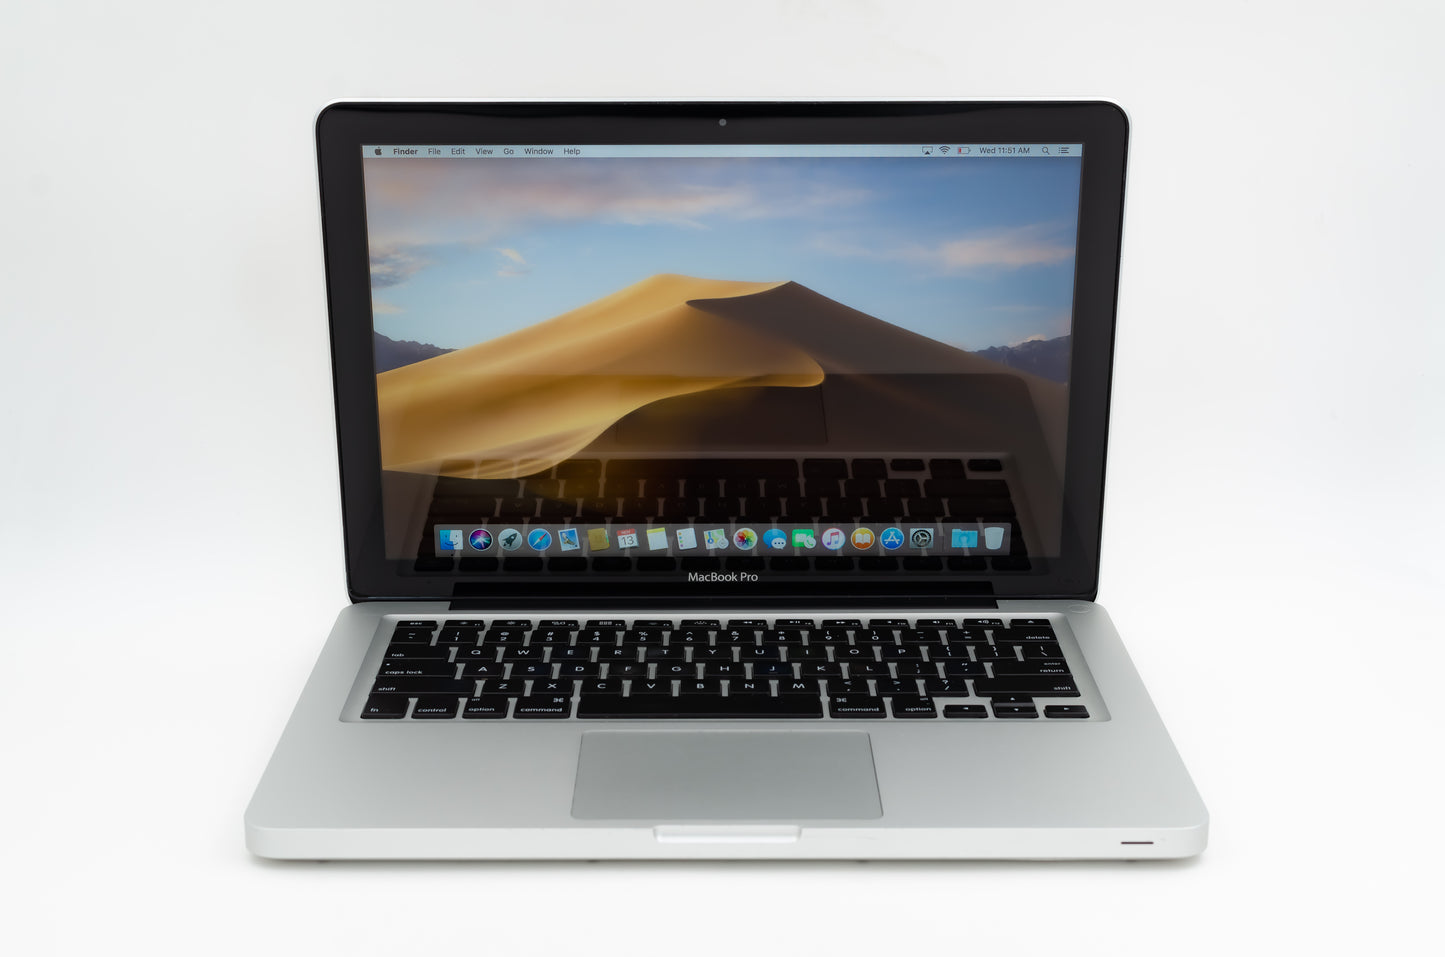 apple-mid-2012-13.3-inch-macbook-pro-a1278-aluminum-dci5 - 2.5ghz processor, 4gb ram, hd 4000 - 512mb gpu-md101ll/a-1